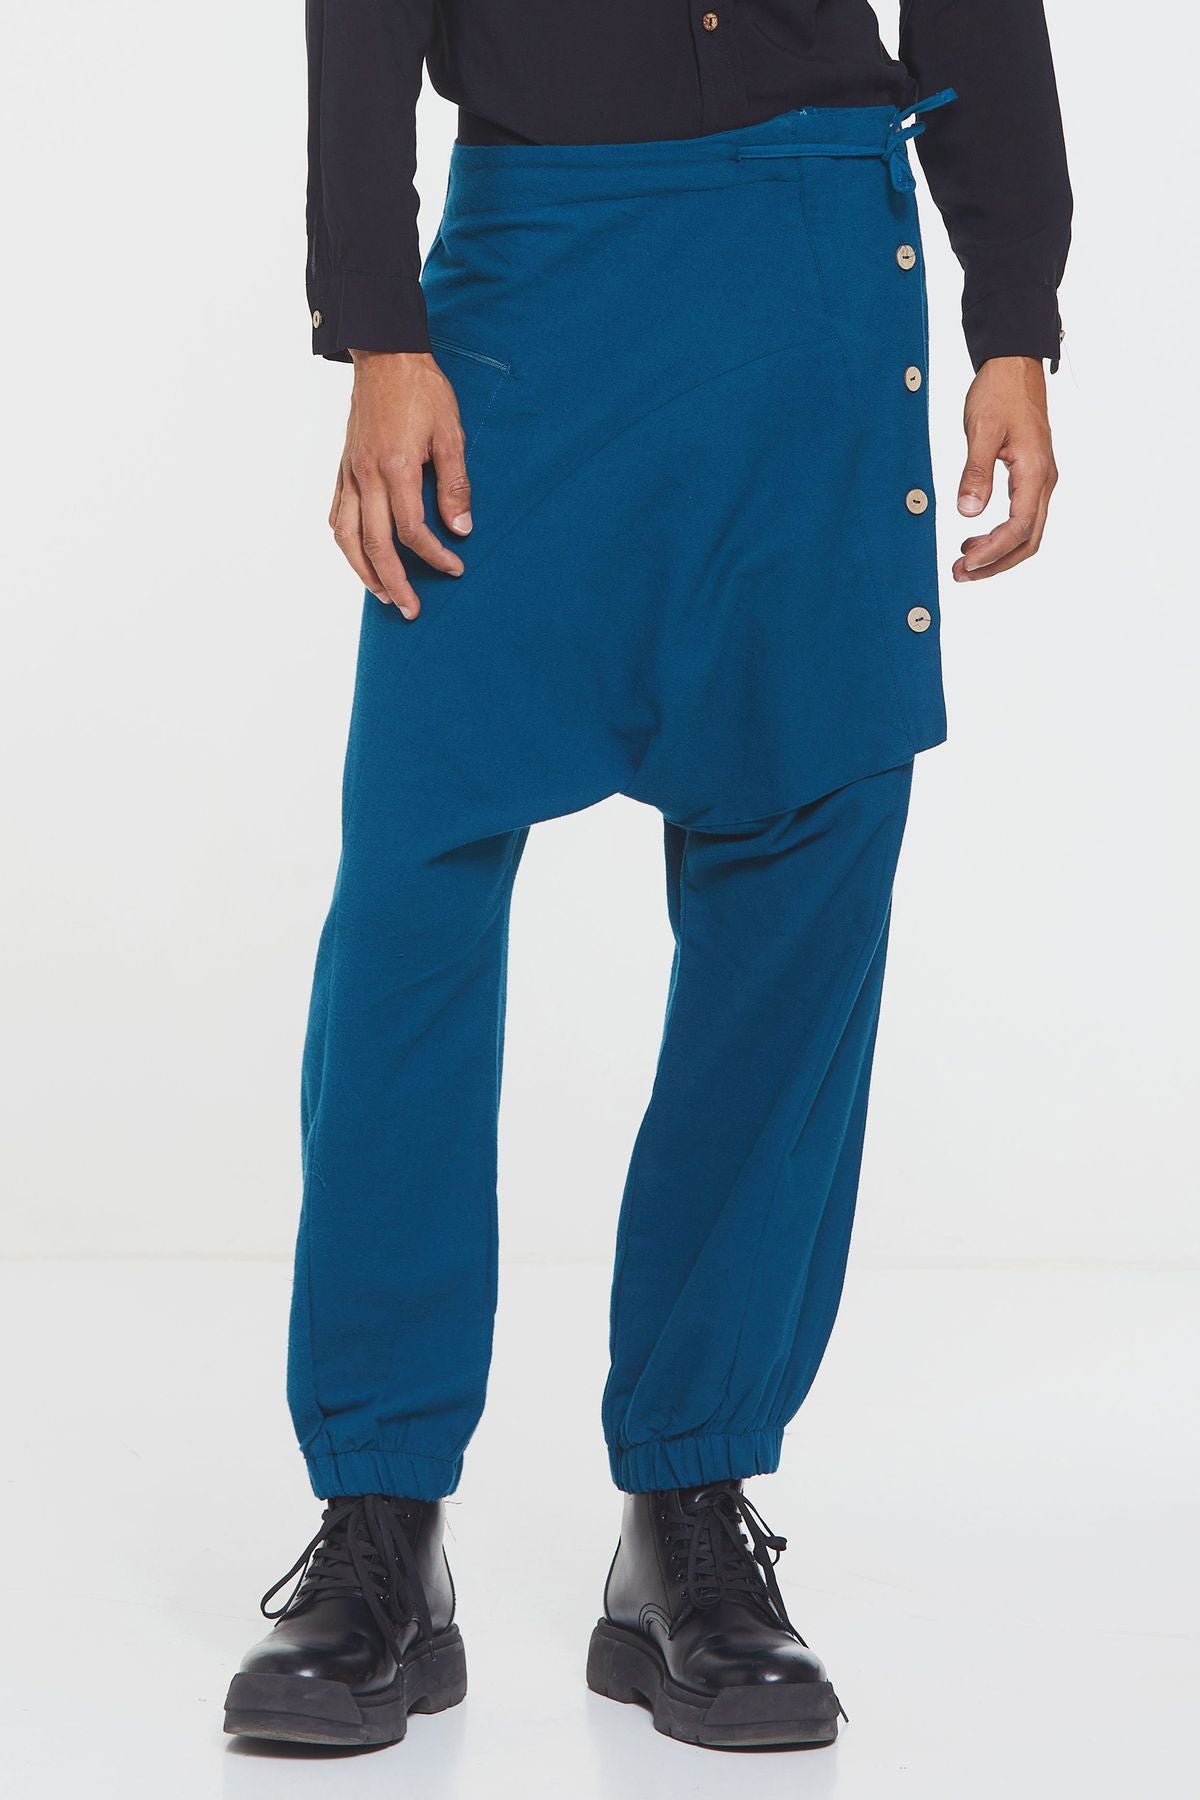 Elastic Cuff Men's Winter Harem Pants with Pocket Turquoise